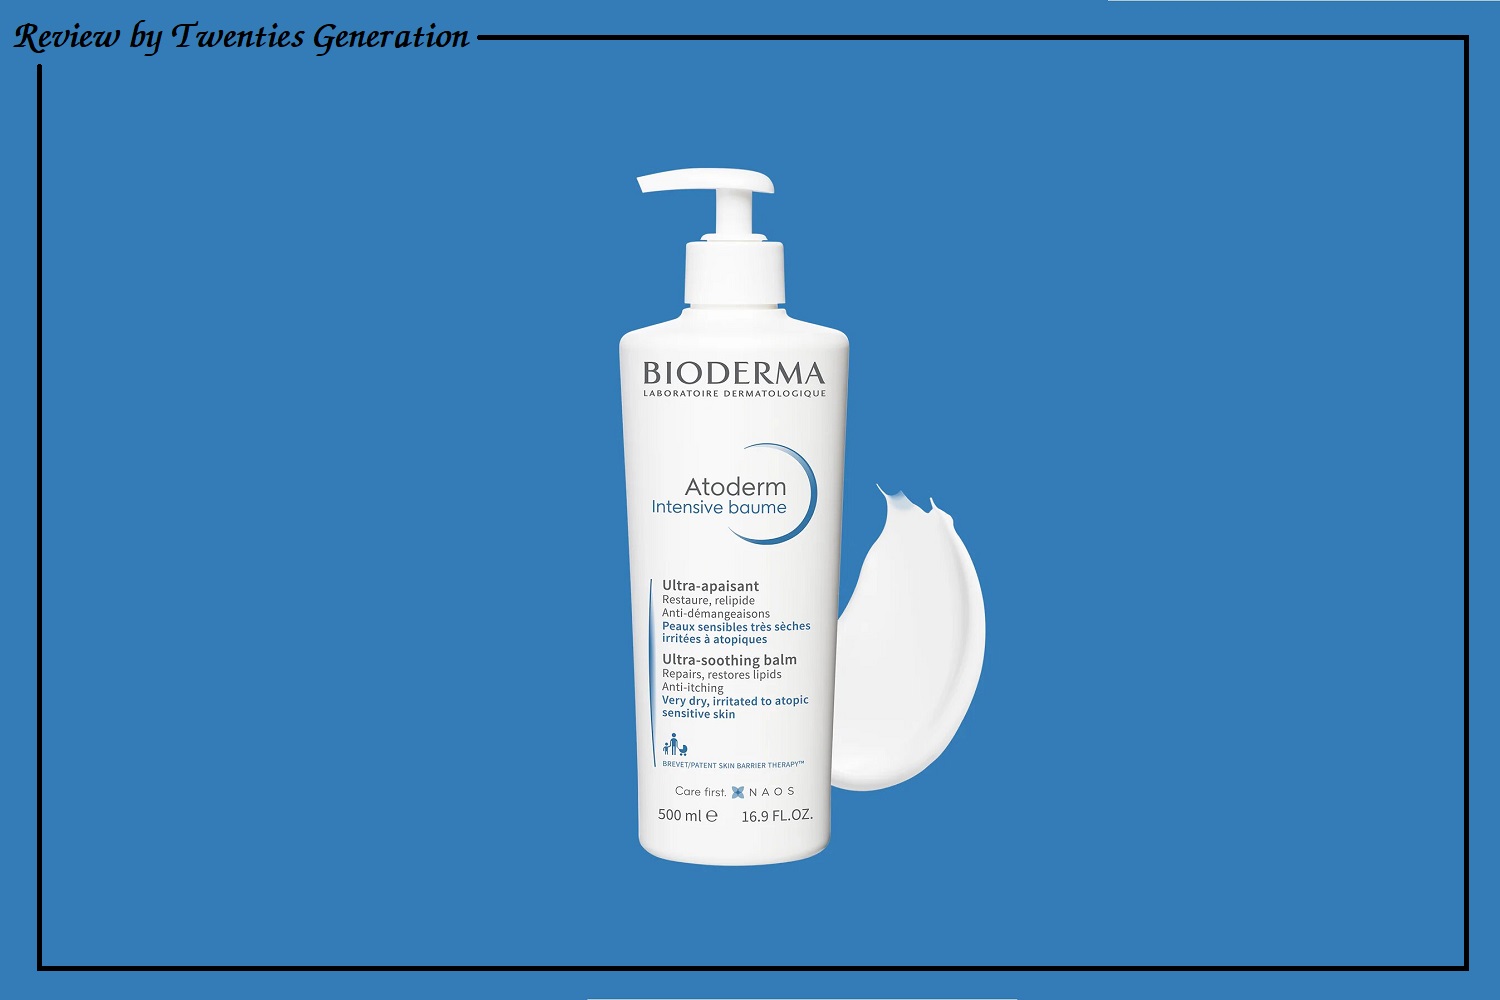 Bioderma Atoderm Intensive Baume Ingredients